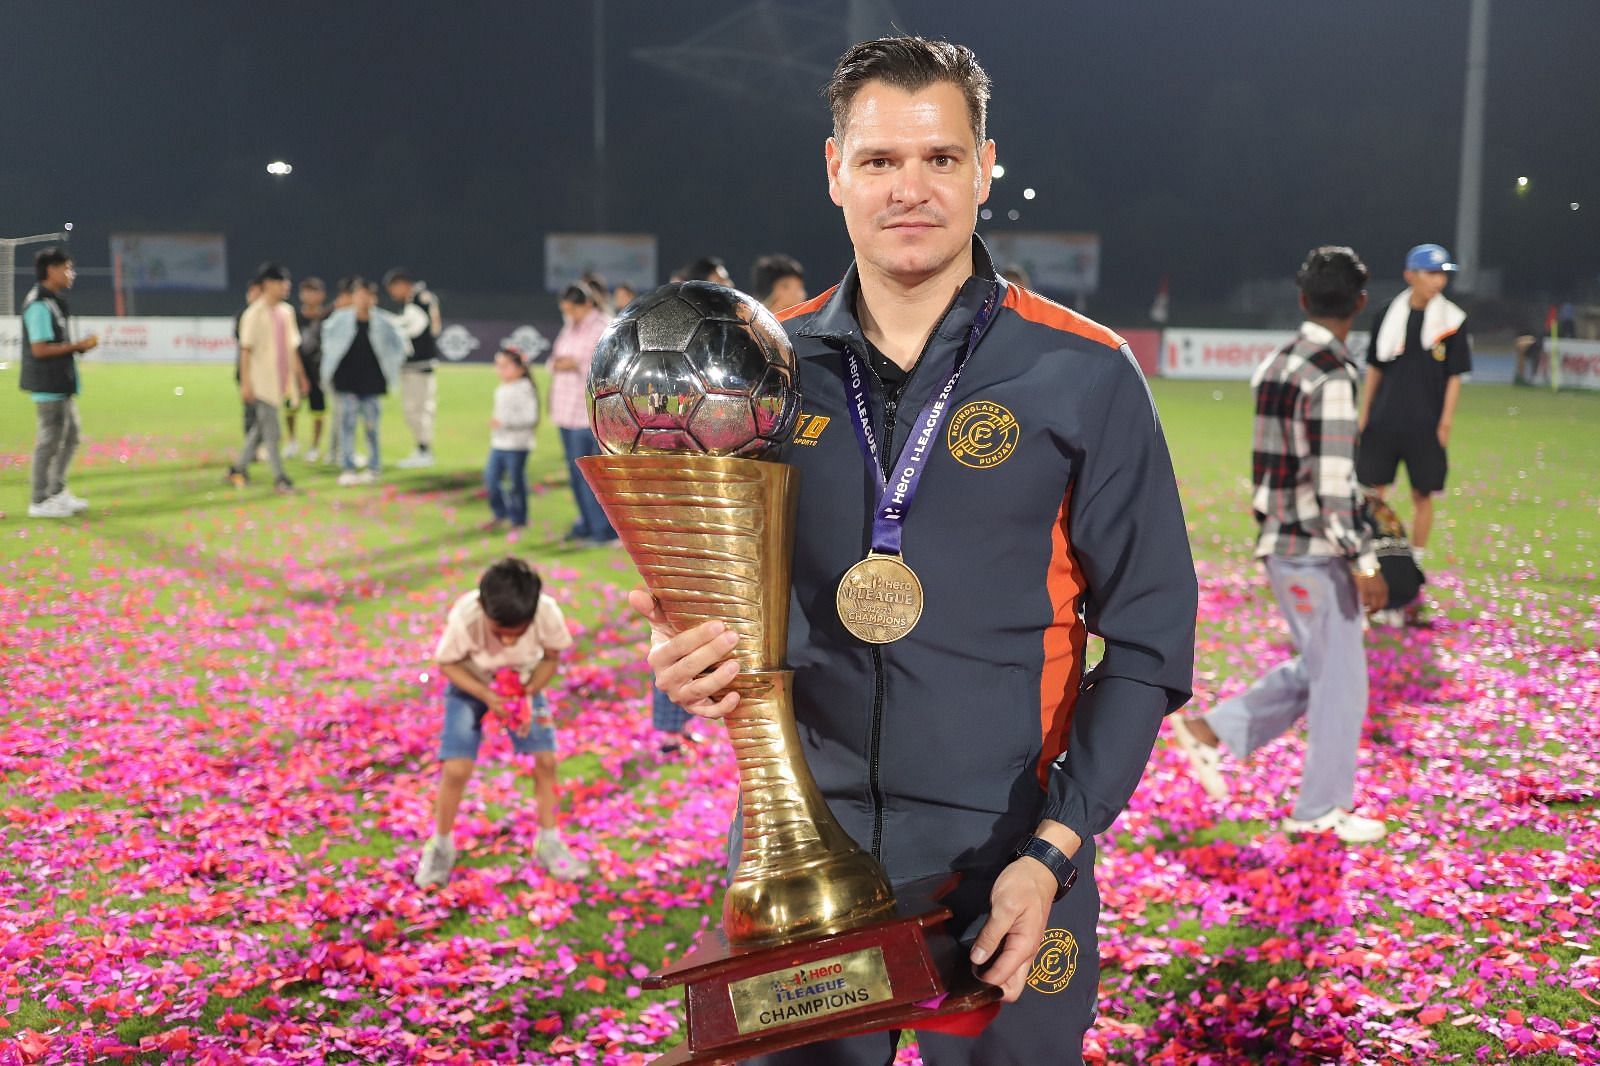 Nikolas with the I-League trophy (Image courtesy: RPFC Media)